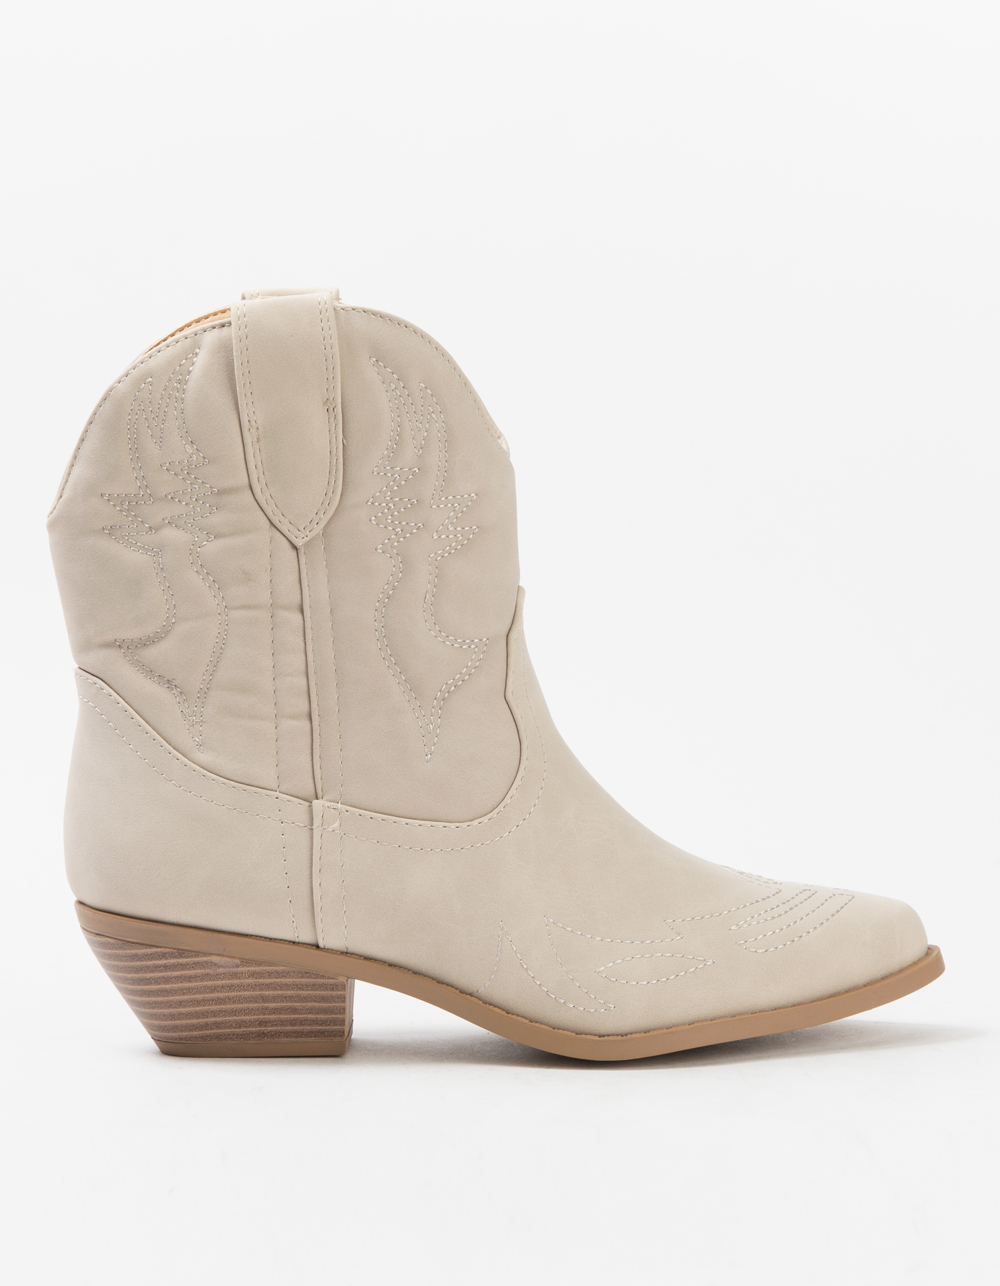 SODA Womens Short Western Boots - SAND | Tillys